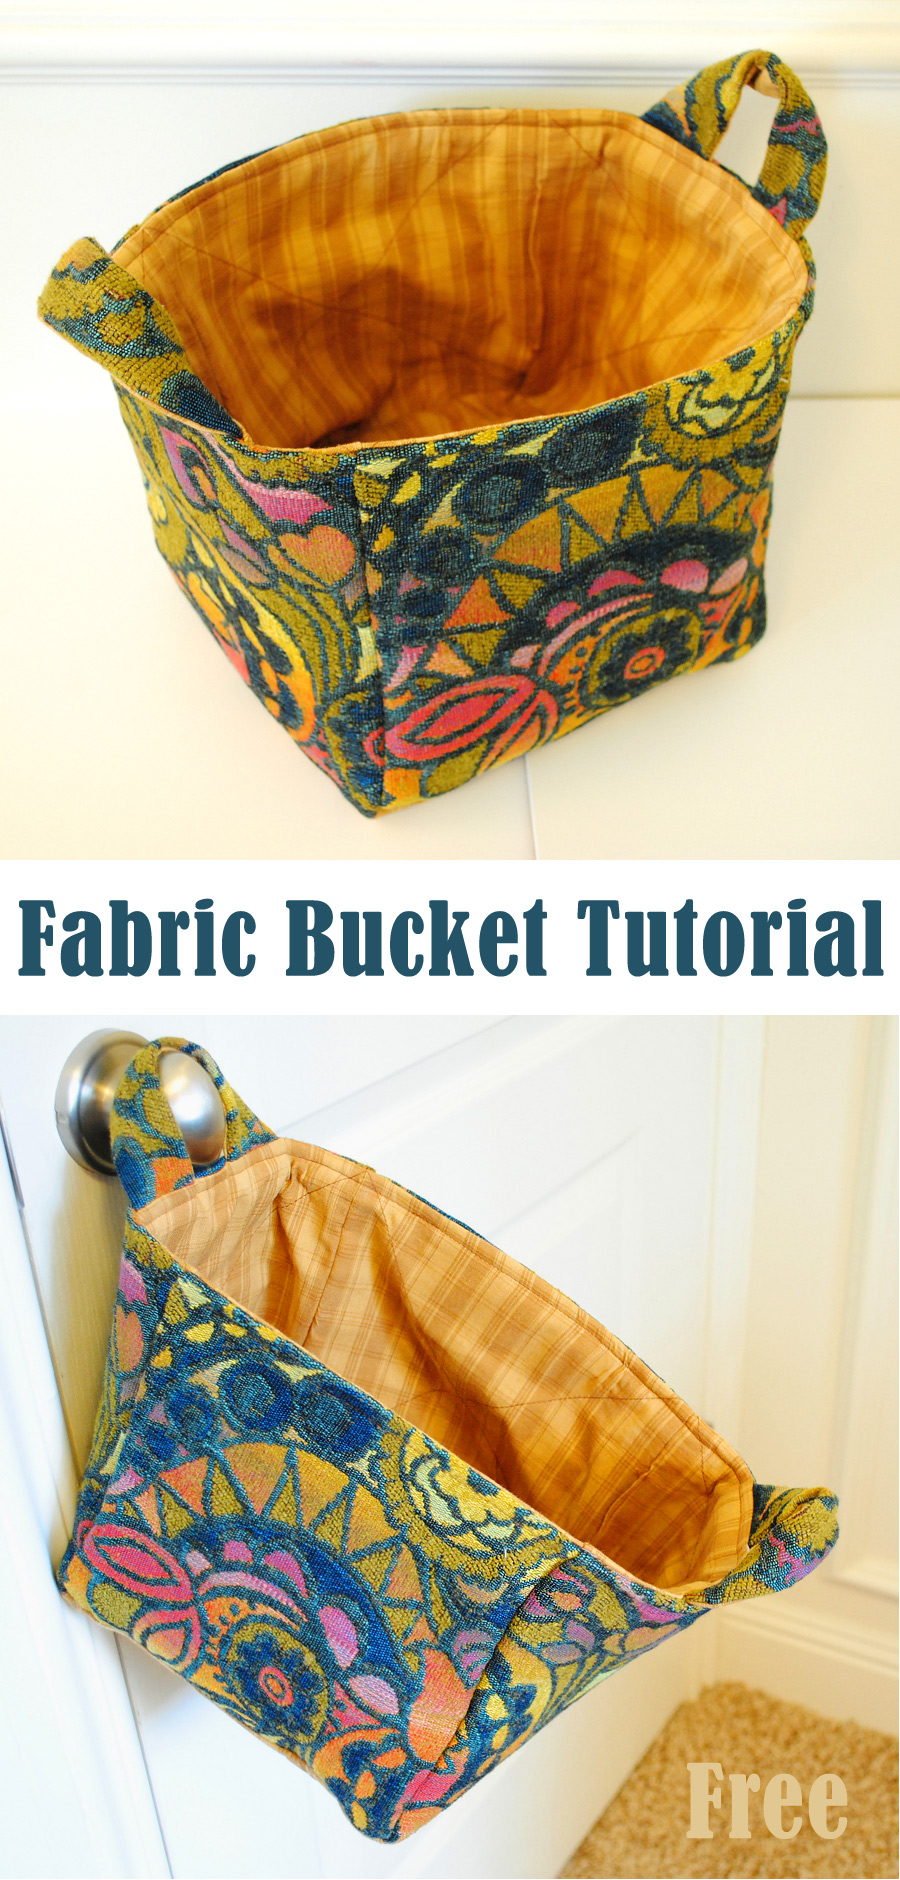 Fabric Bucket Free Tutorial